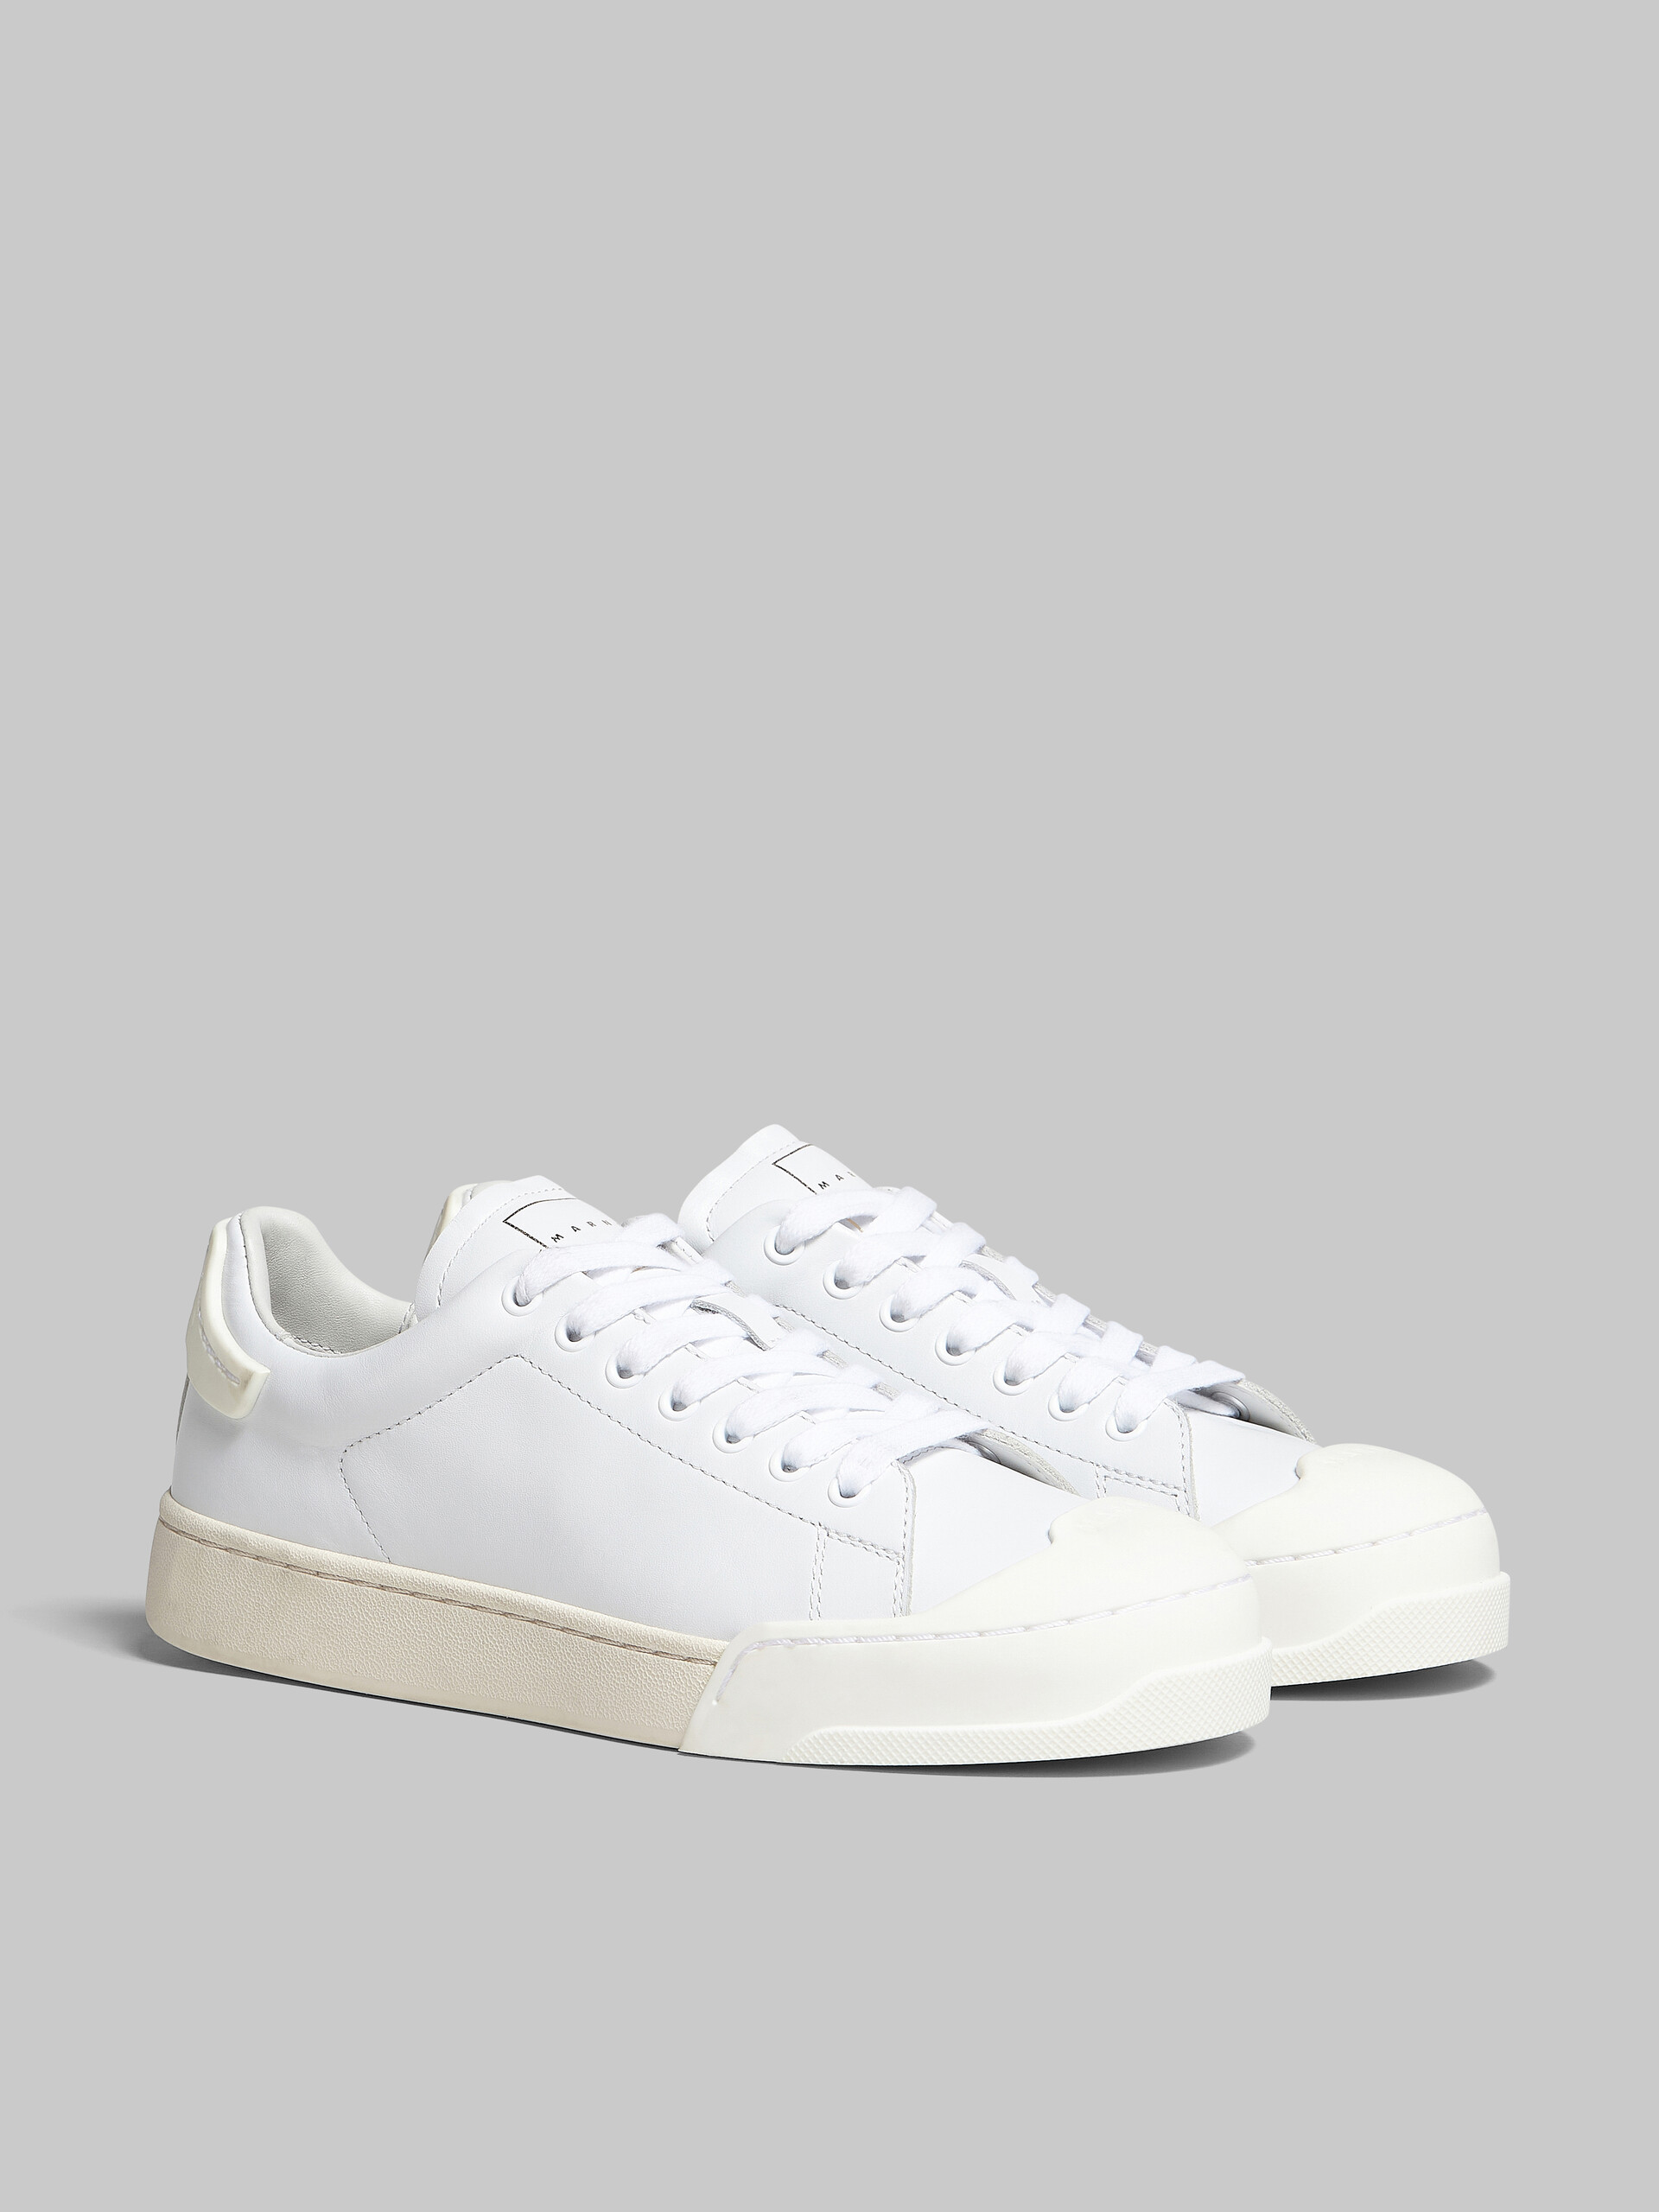 Dada Bumper sneaker in white leather - Sneakers - Image 2